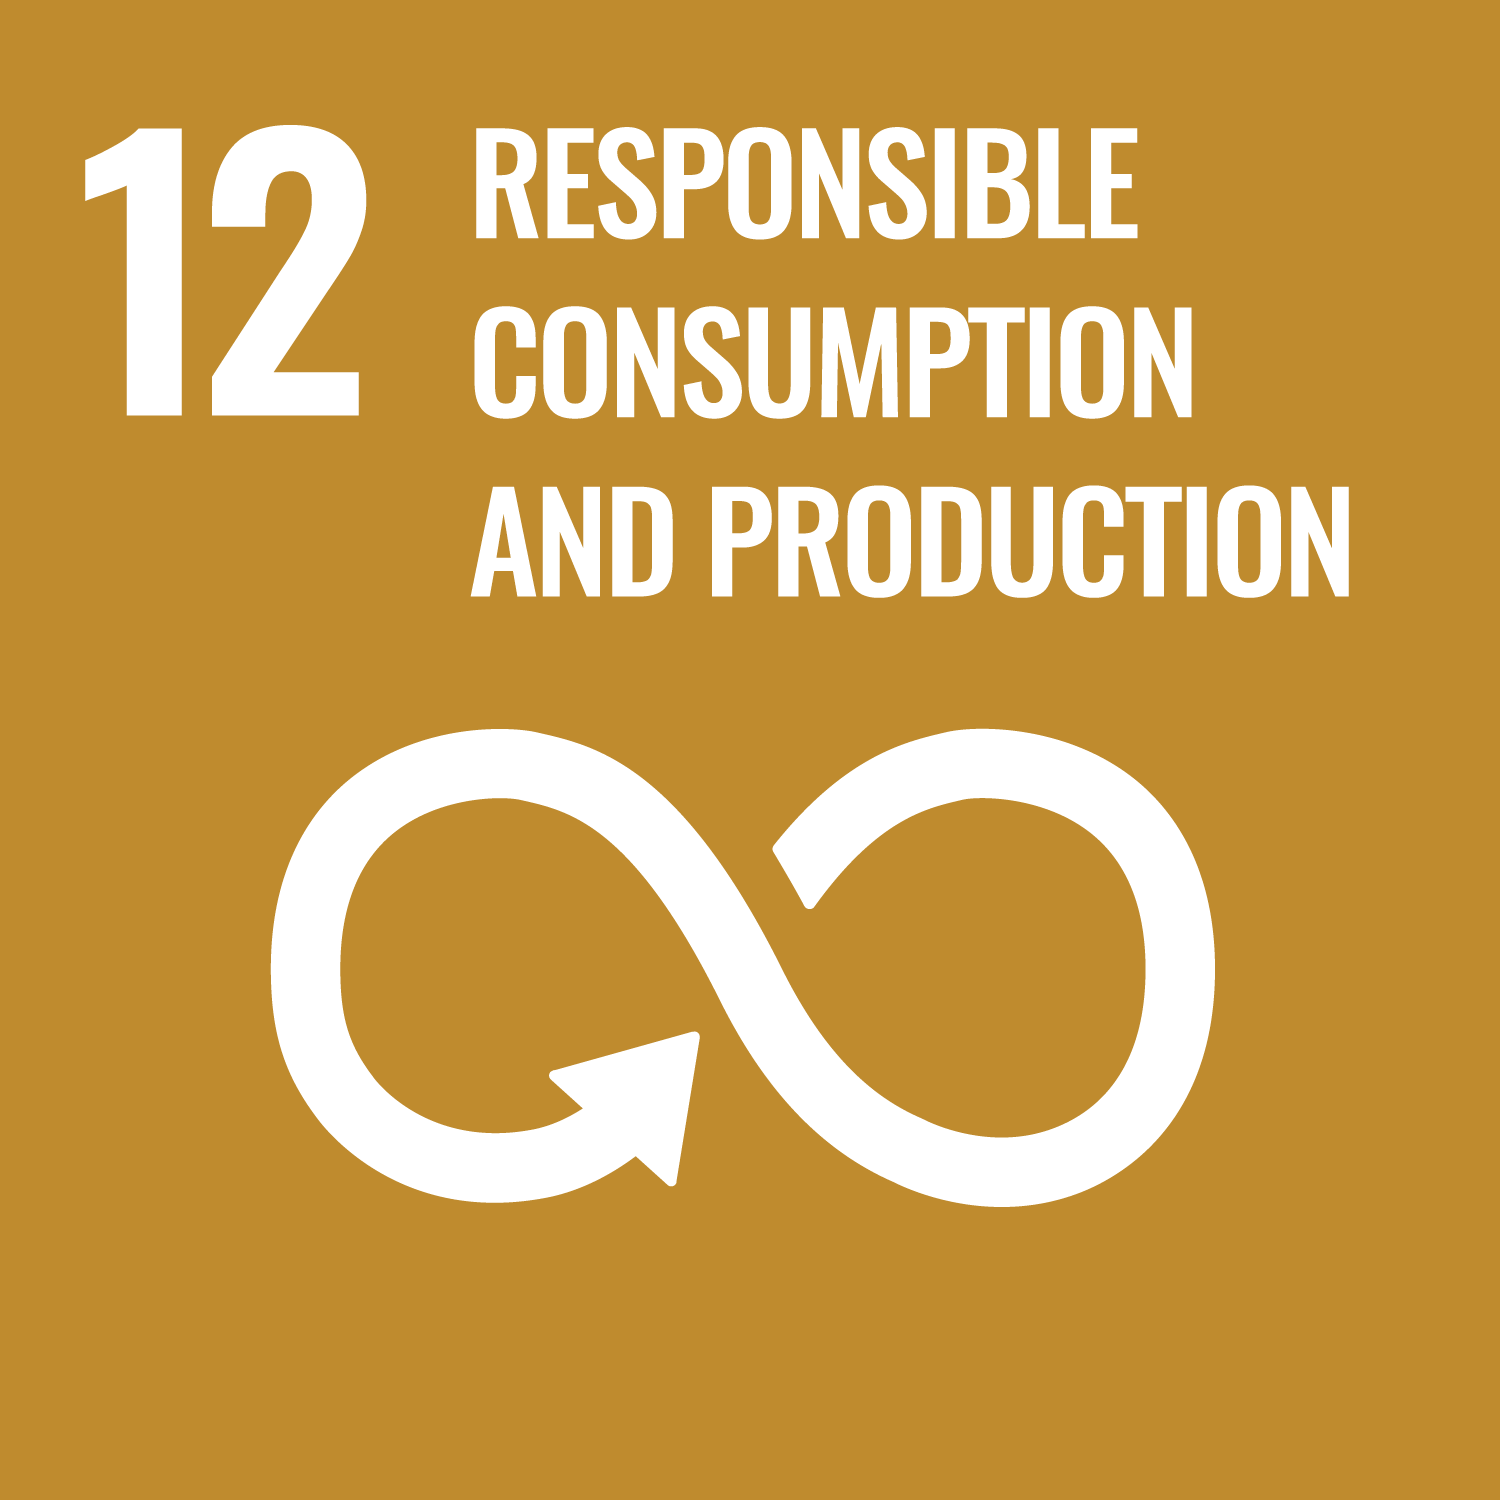 UN sustainable development goal 12 responsible consumption and production